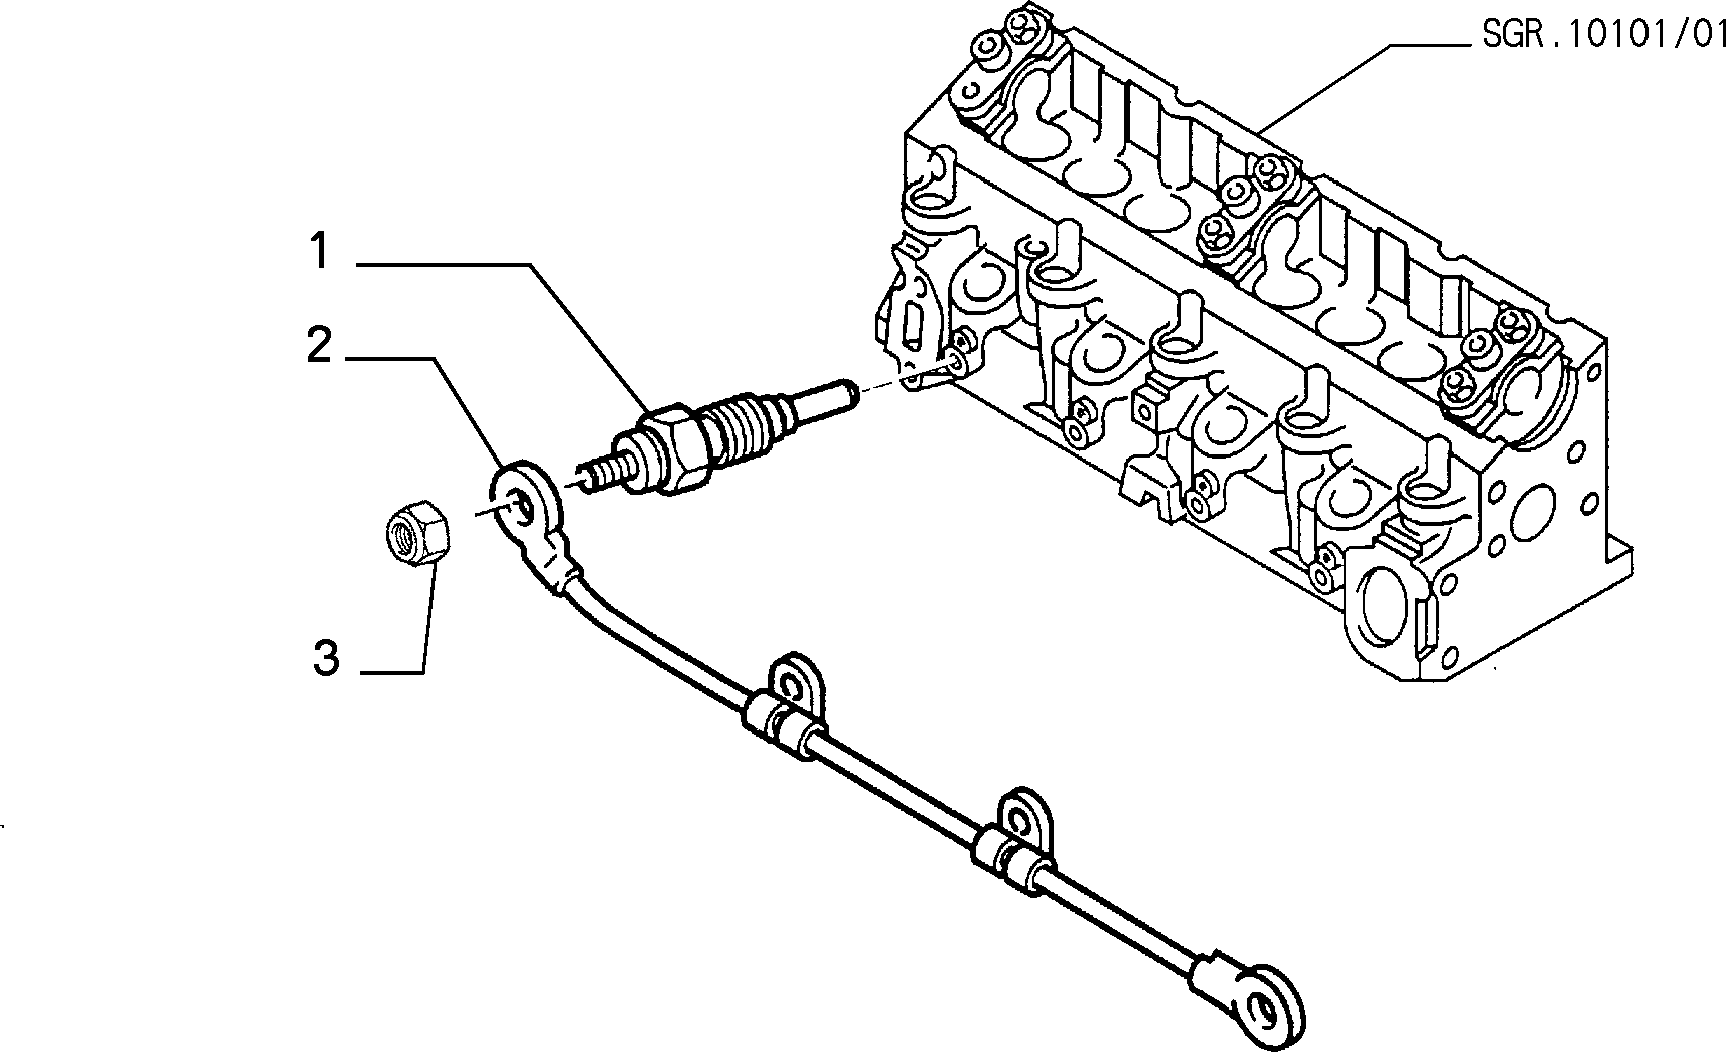 ENGINE START-UP per Lancia ZETA "Z" (1994 - 2002)